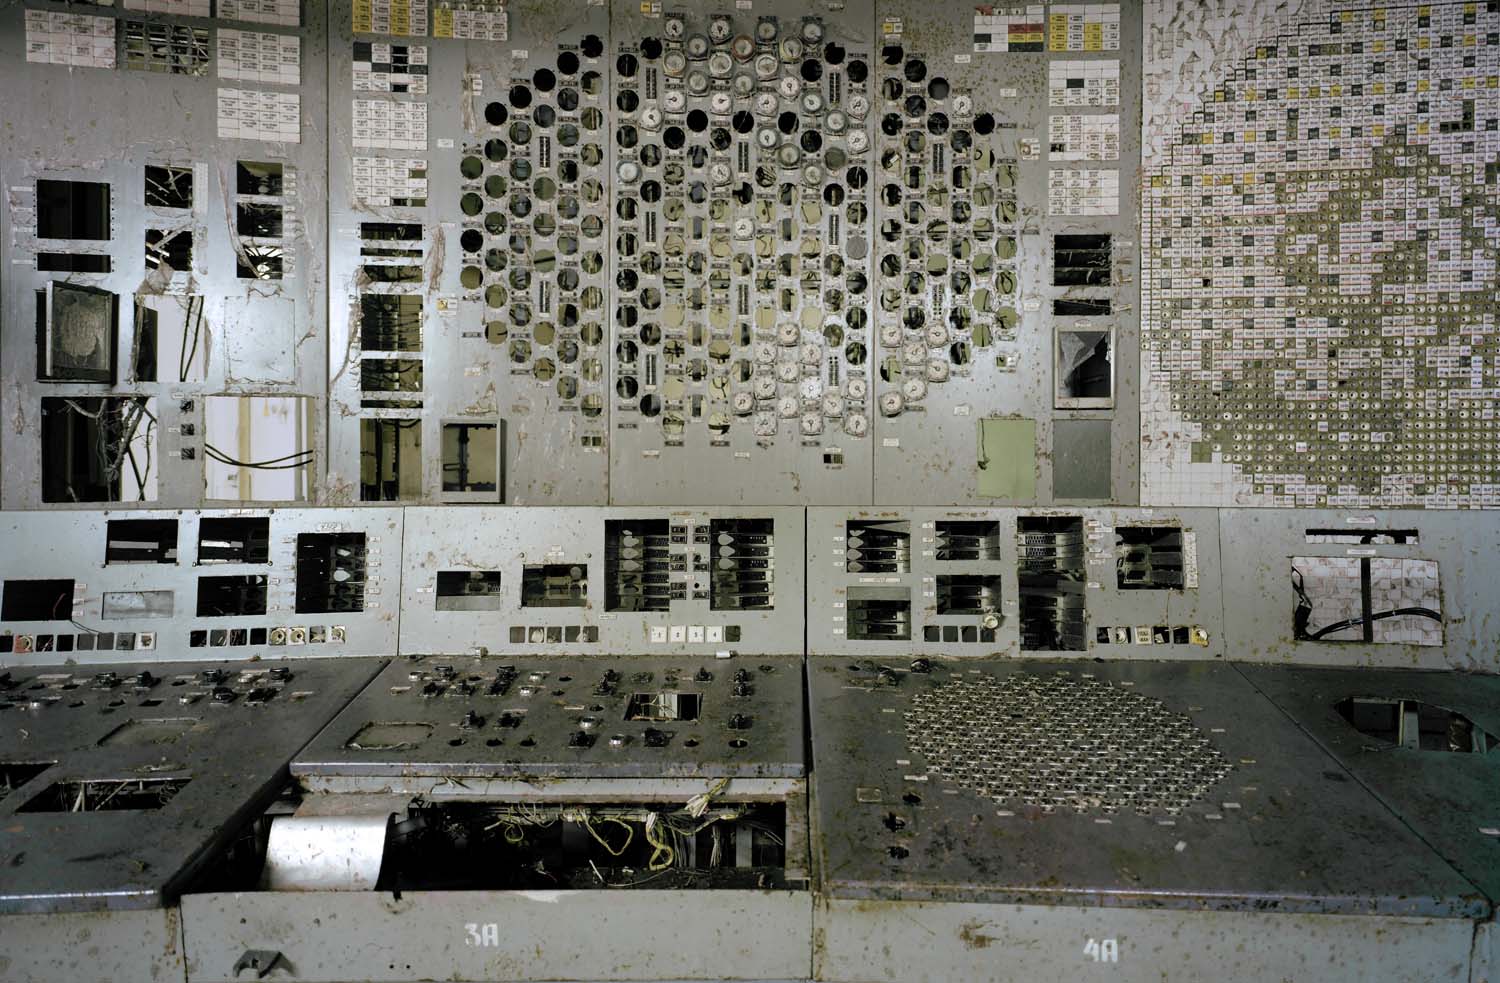 couch/uploads/image/artikkler/2019/sovjet/MarkerinkCary1998-Chernobyl-Control-panel-Reactor-4.jpg